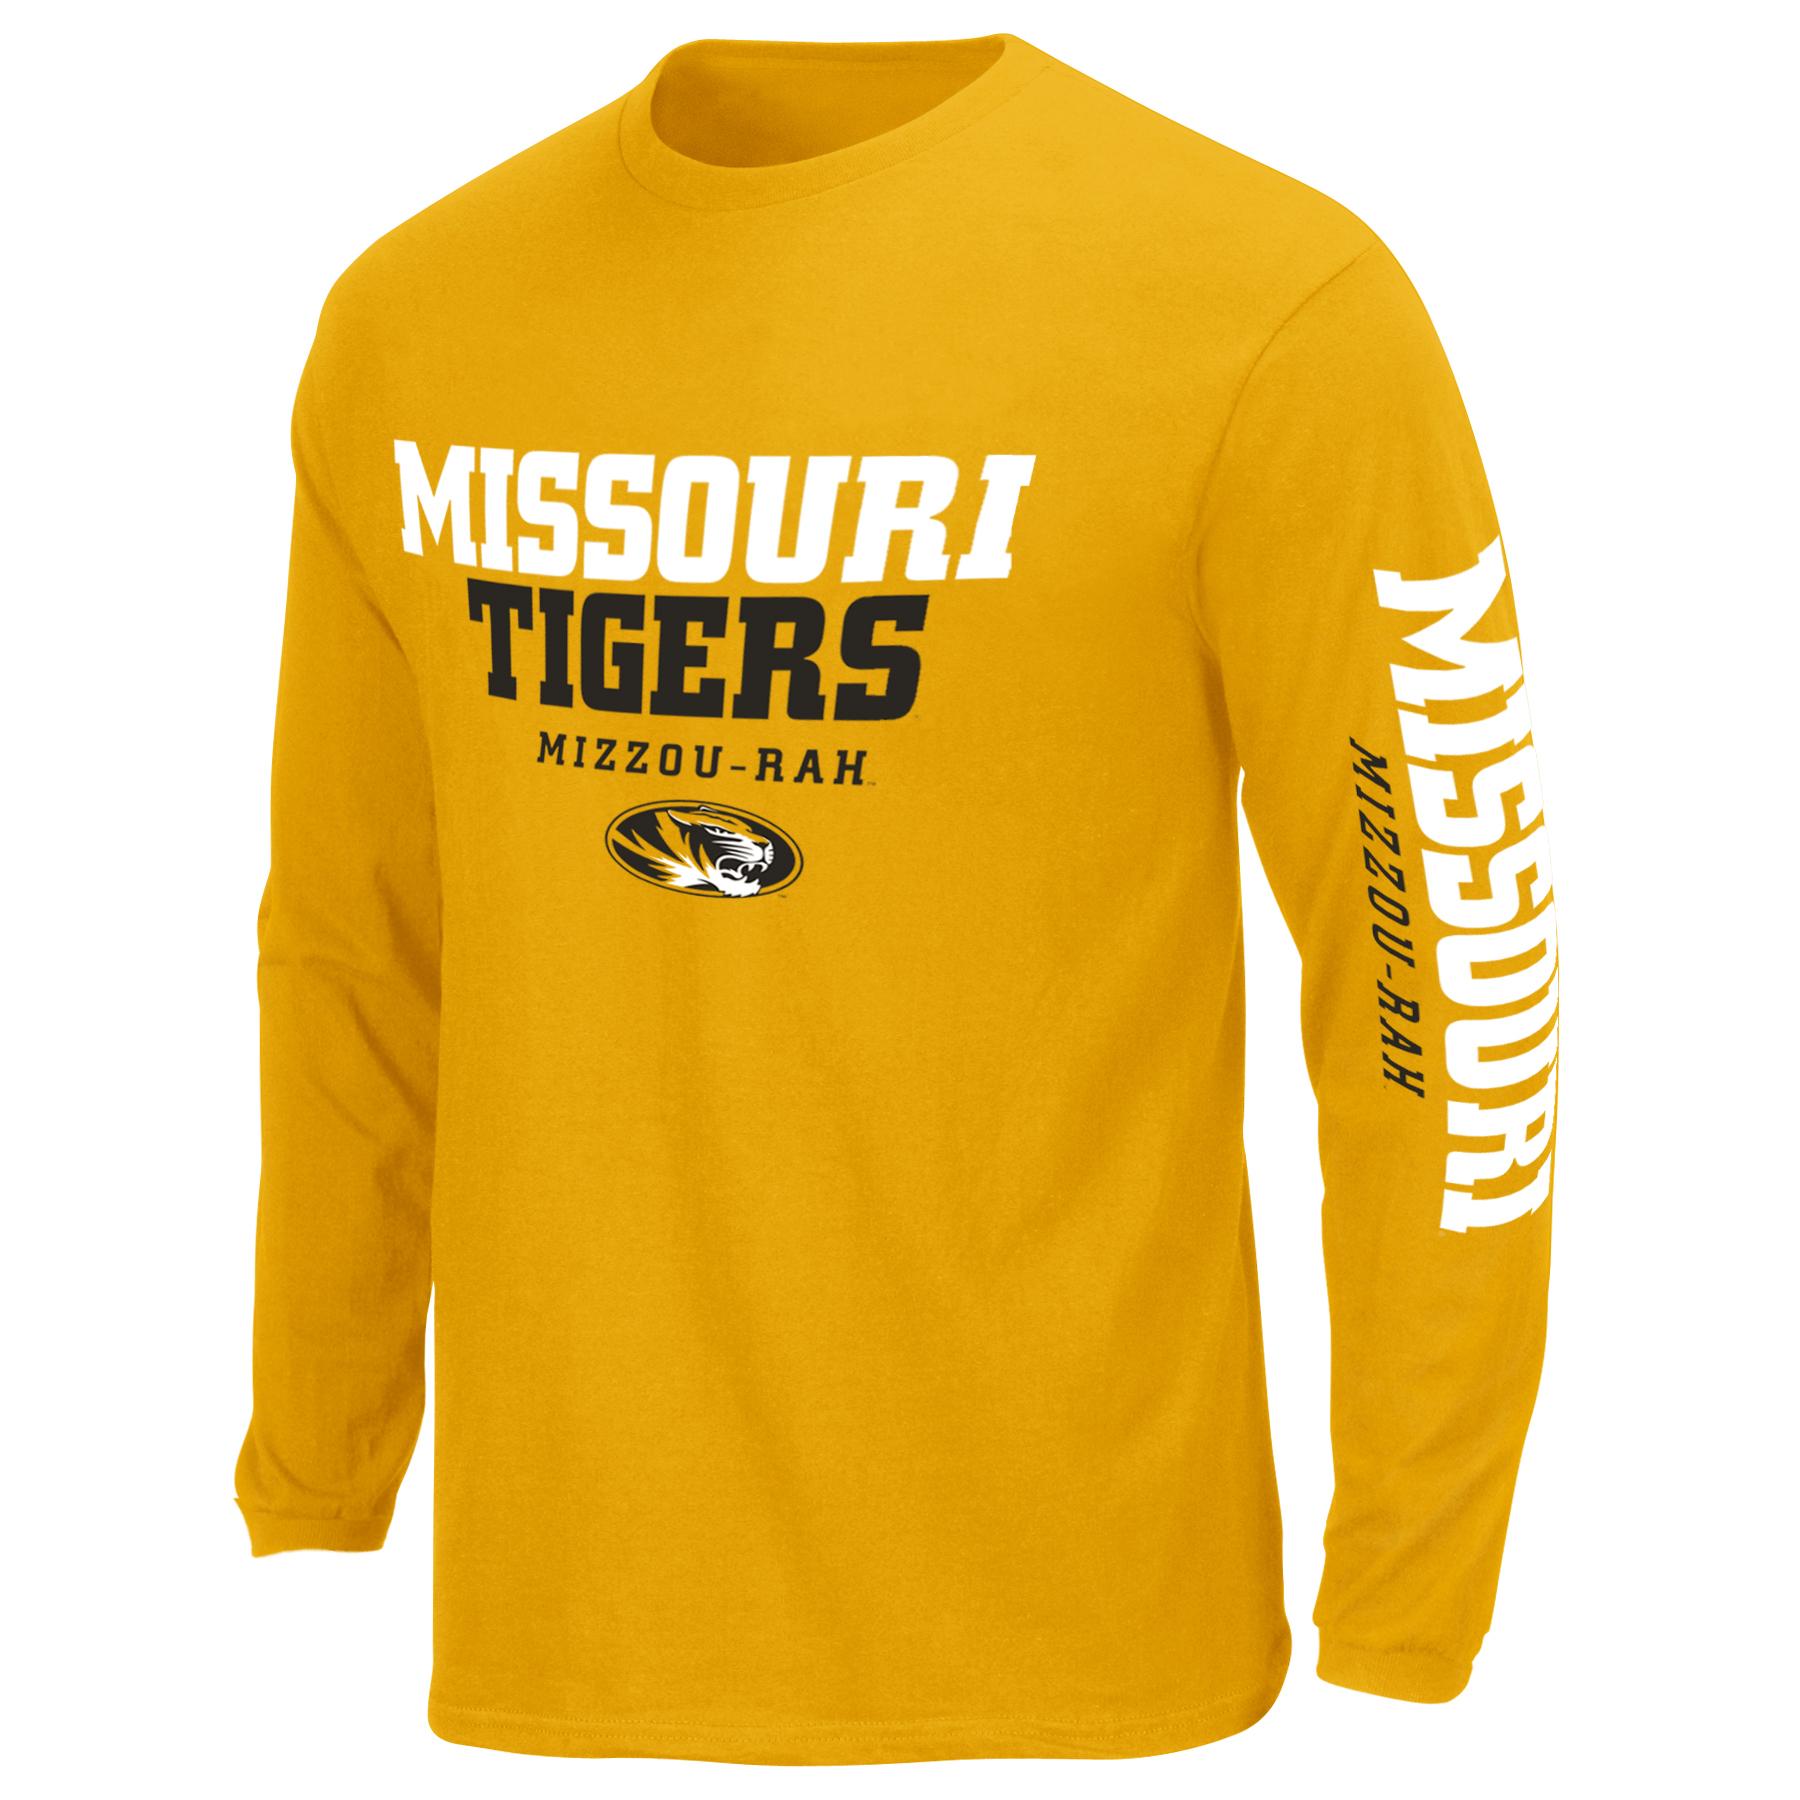 NCAA Men's Long-Sleeve T-Shirt - Missouri Tigers